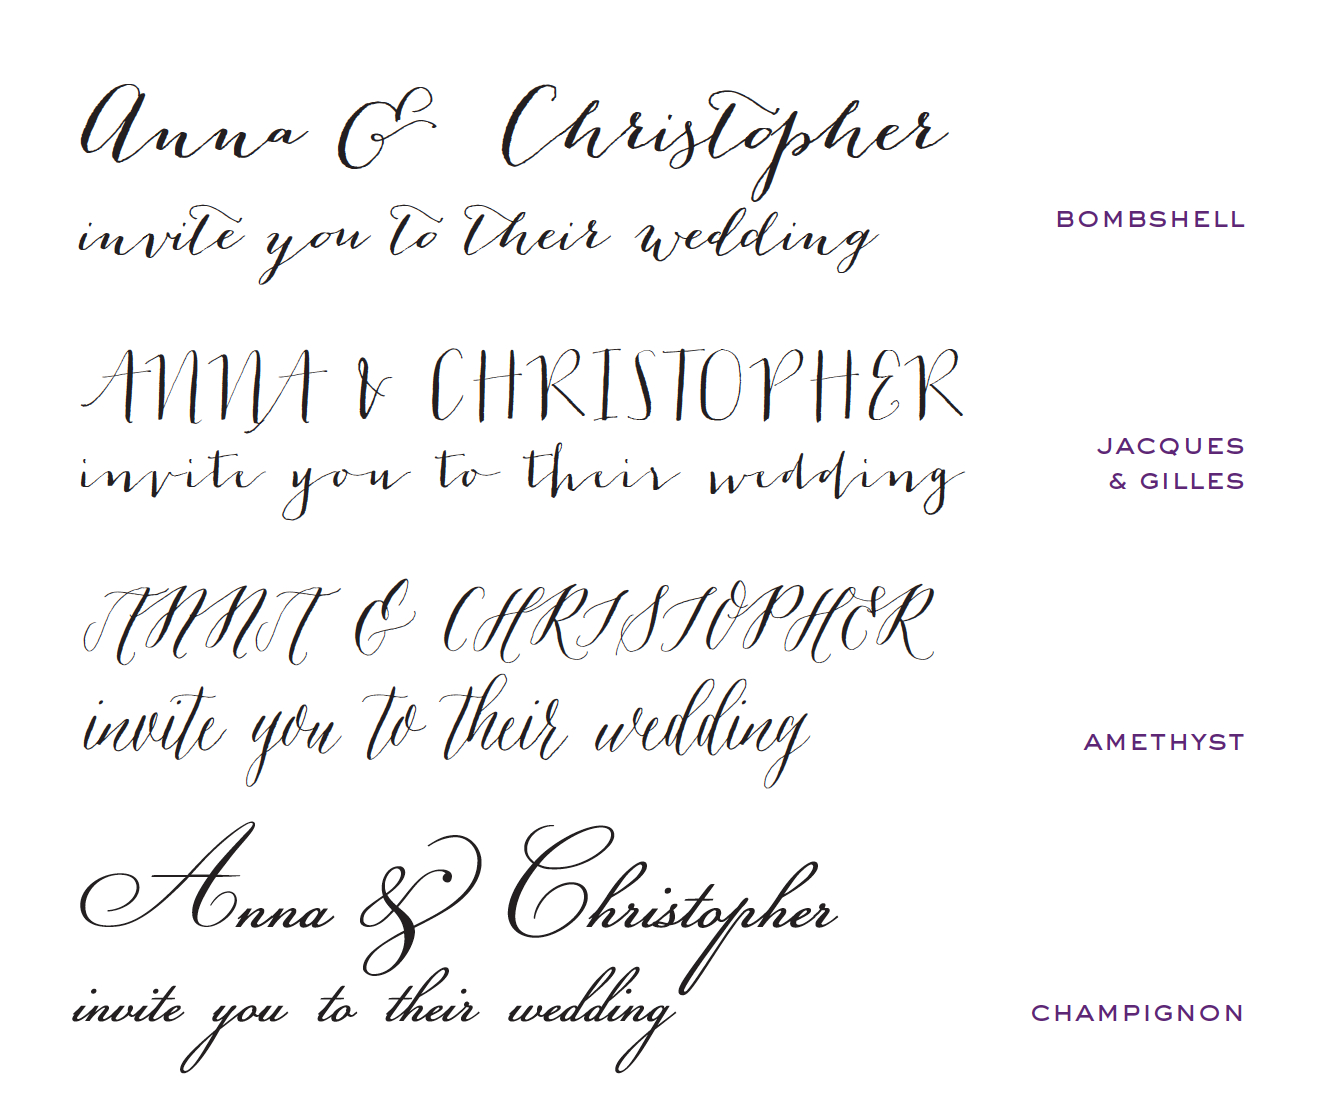 Шрифты для пригласительных. Шрифт для пригласительных. Свадебные шрифты. Красивый шрифт для пригласительных. Красивый свадебный шрифт.